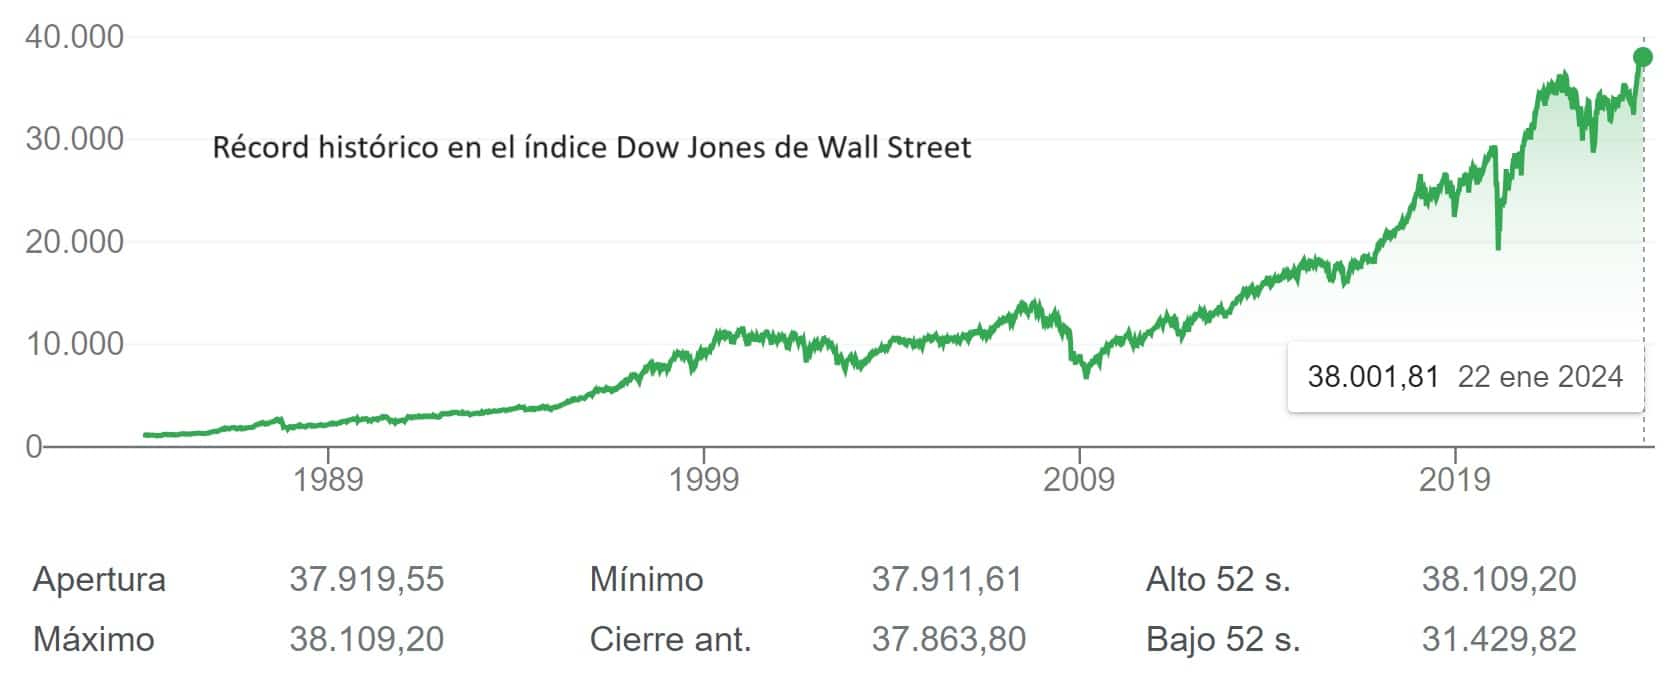 Récord histórico en Wall Street